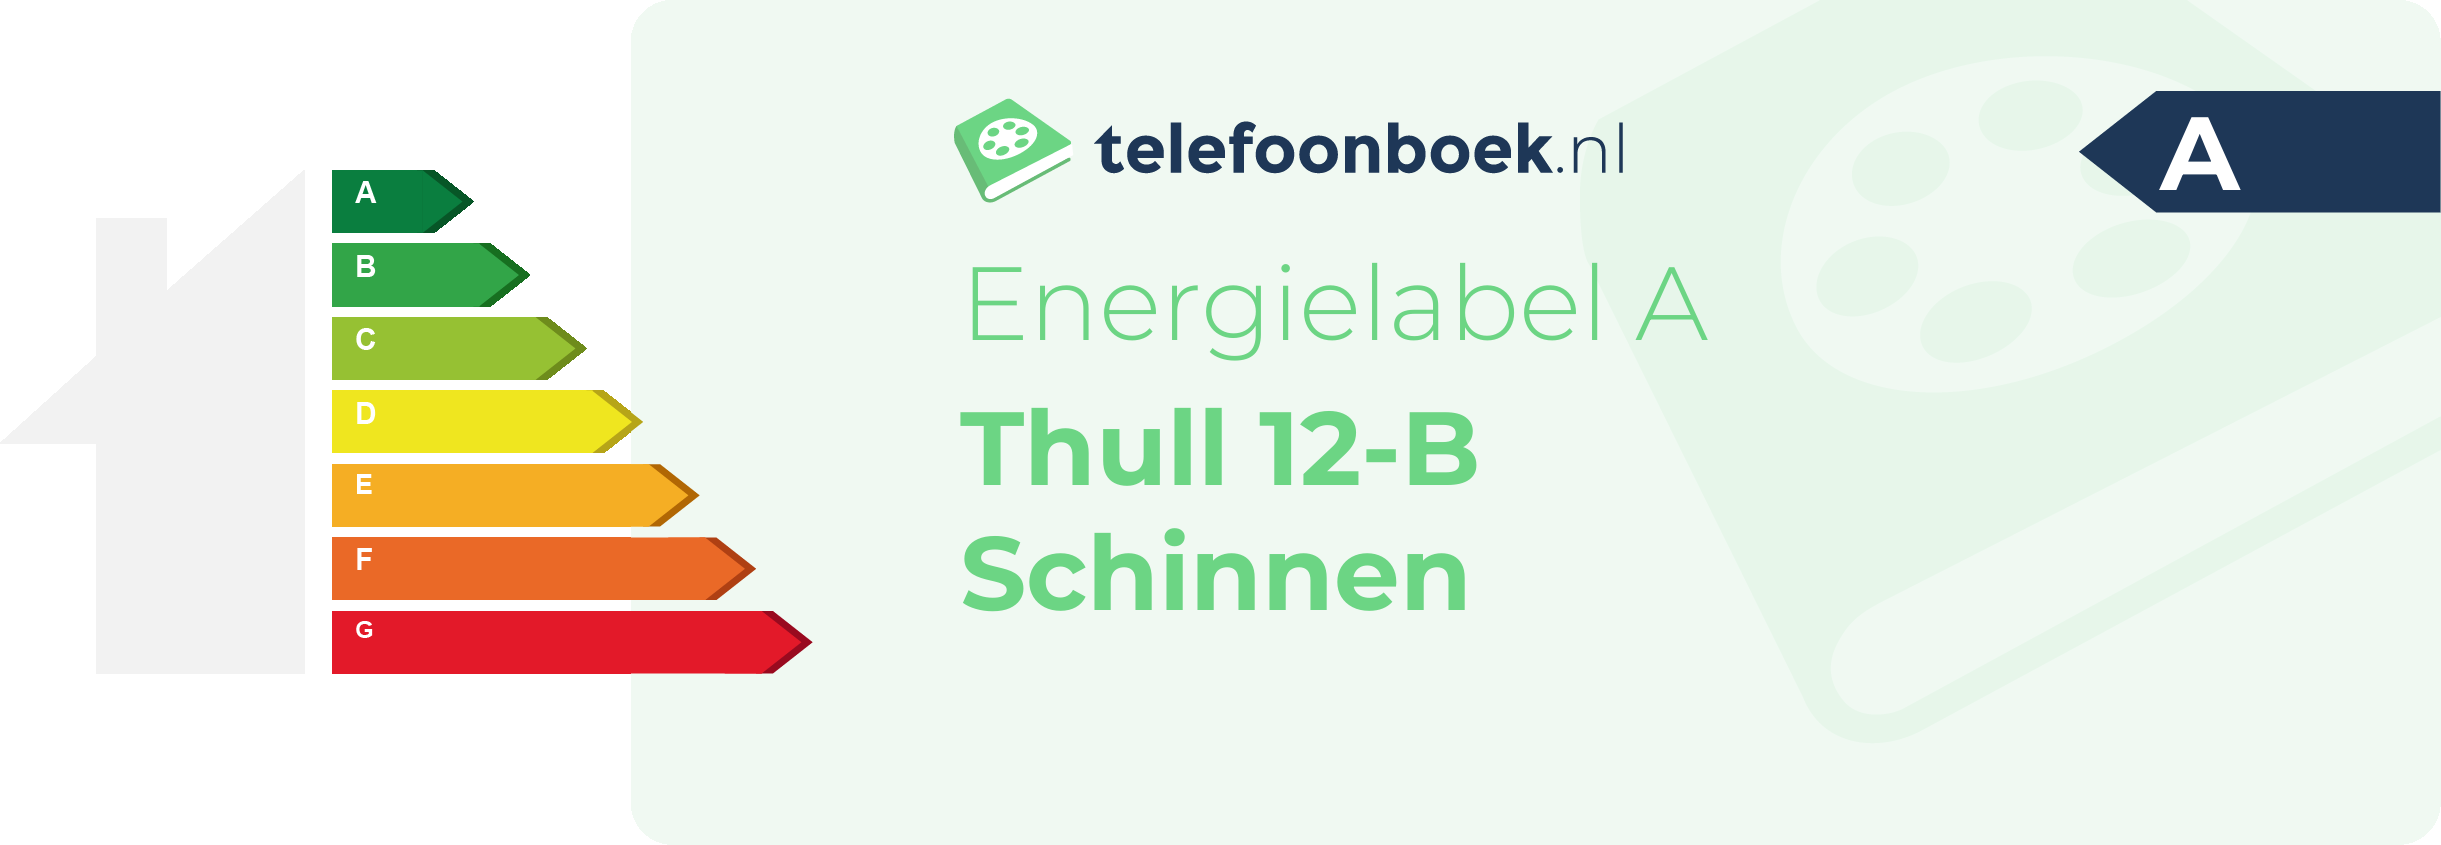 Energielabel Thull 12-B Schinnen